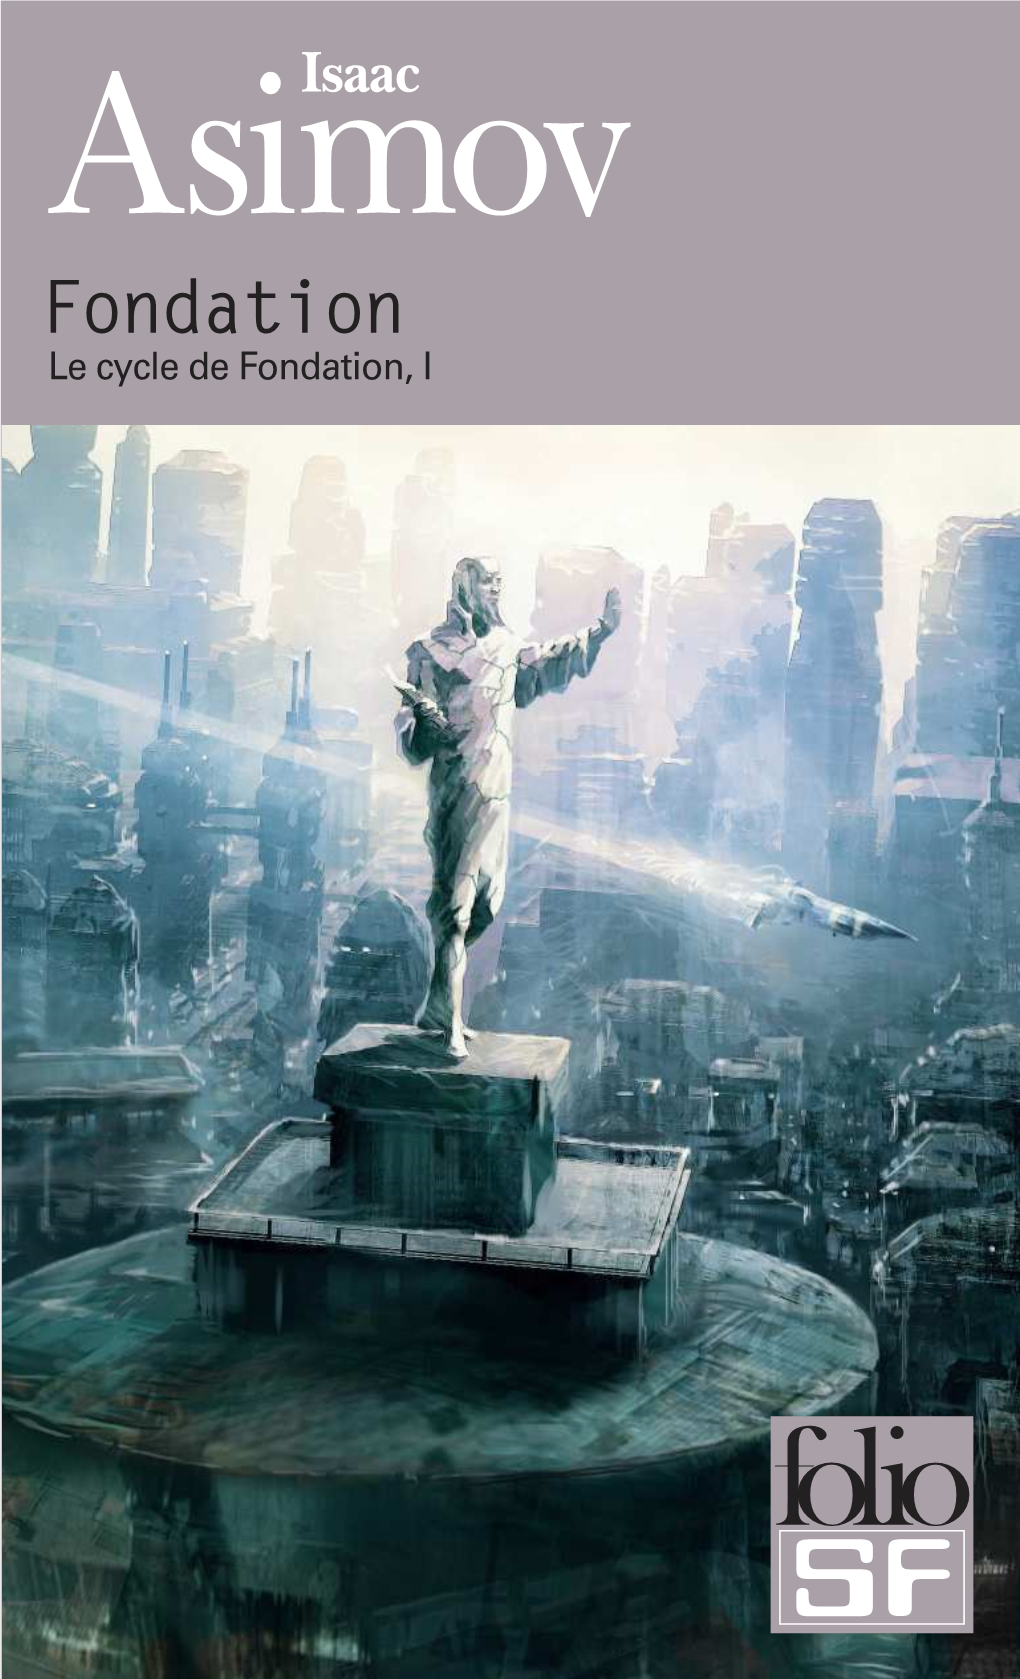 Asimovisaac Fondation Le Cycle De Fondation, I